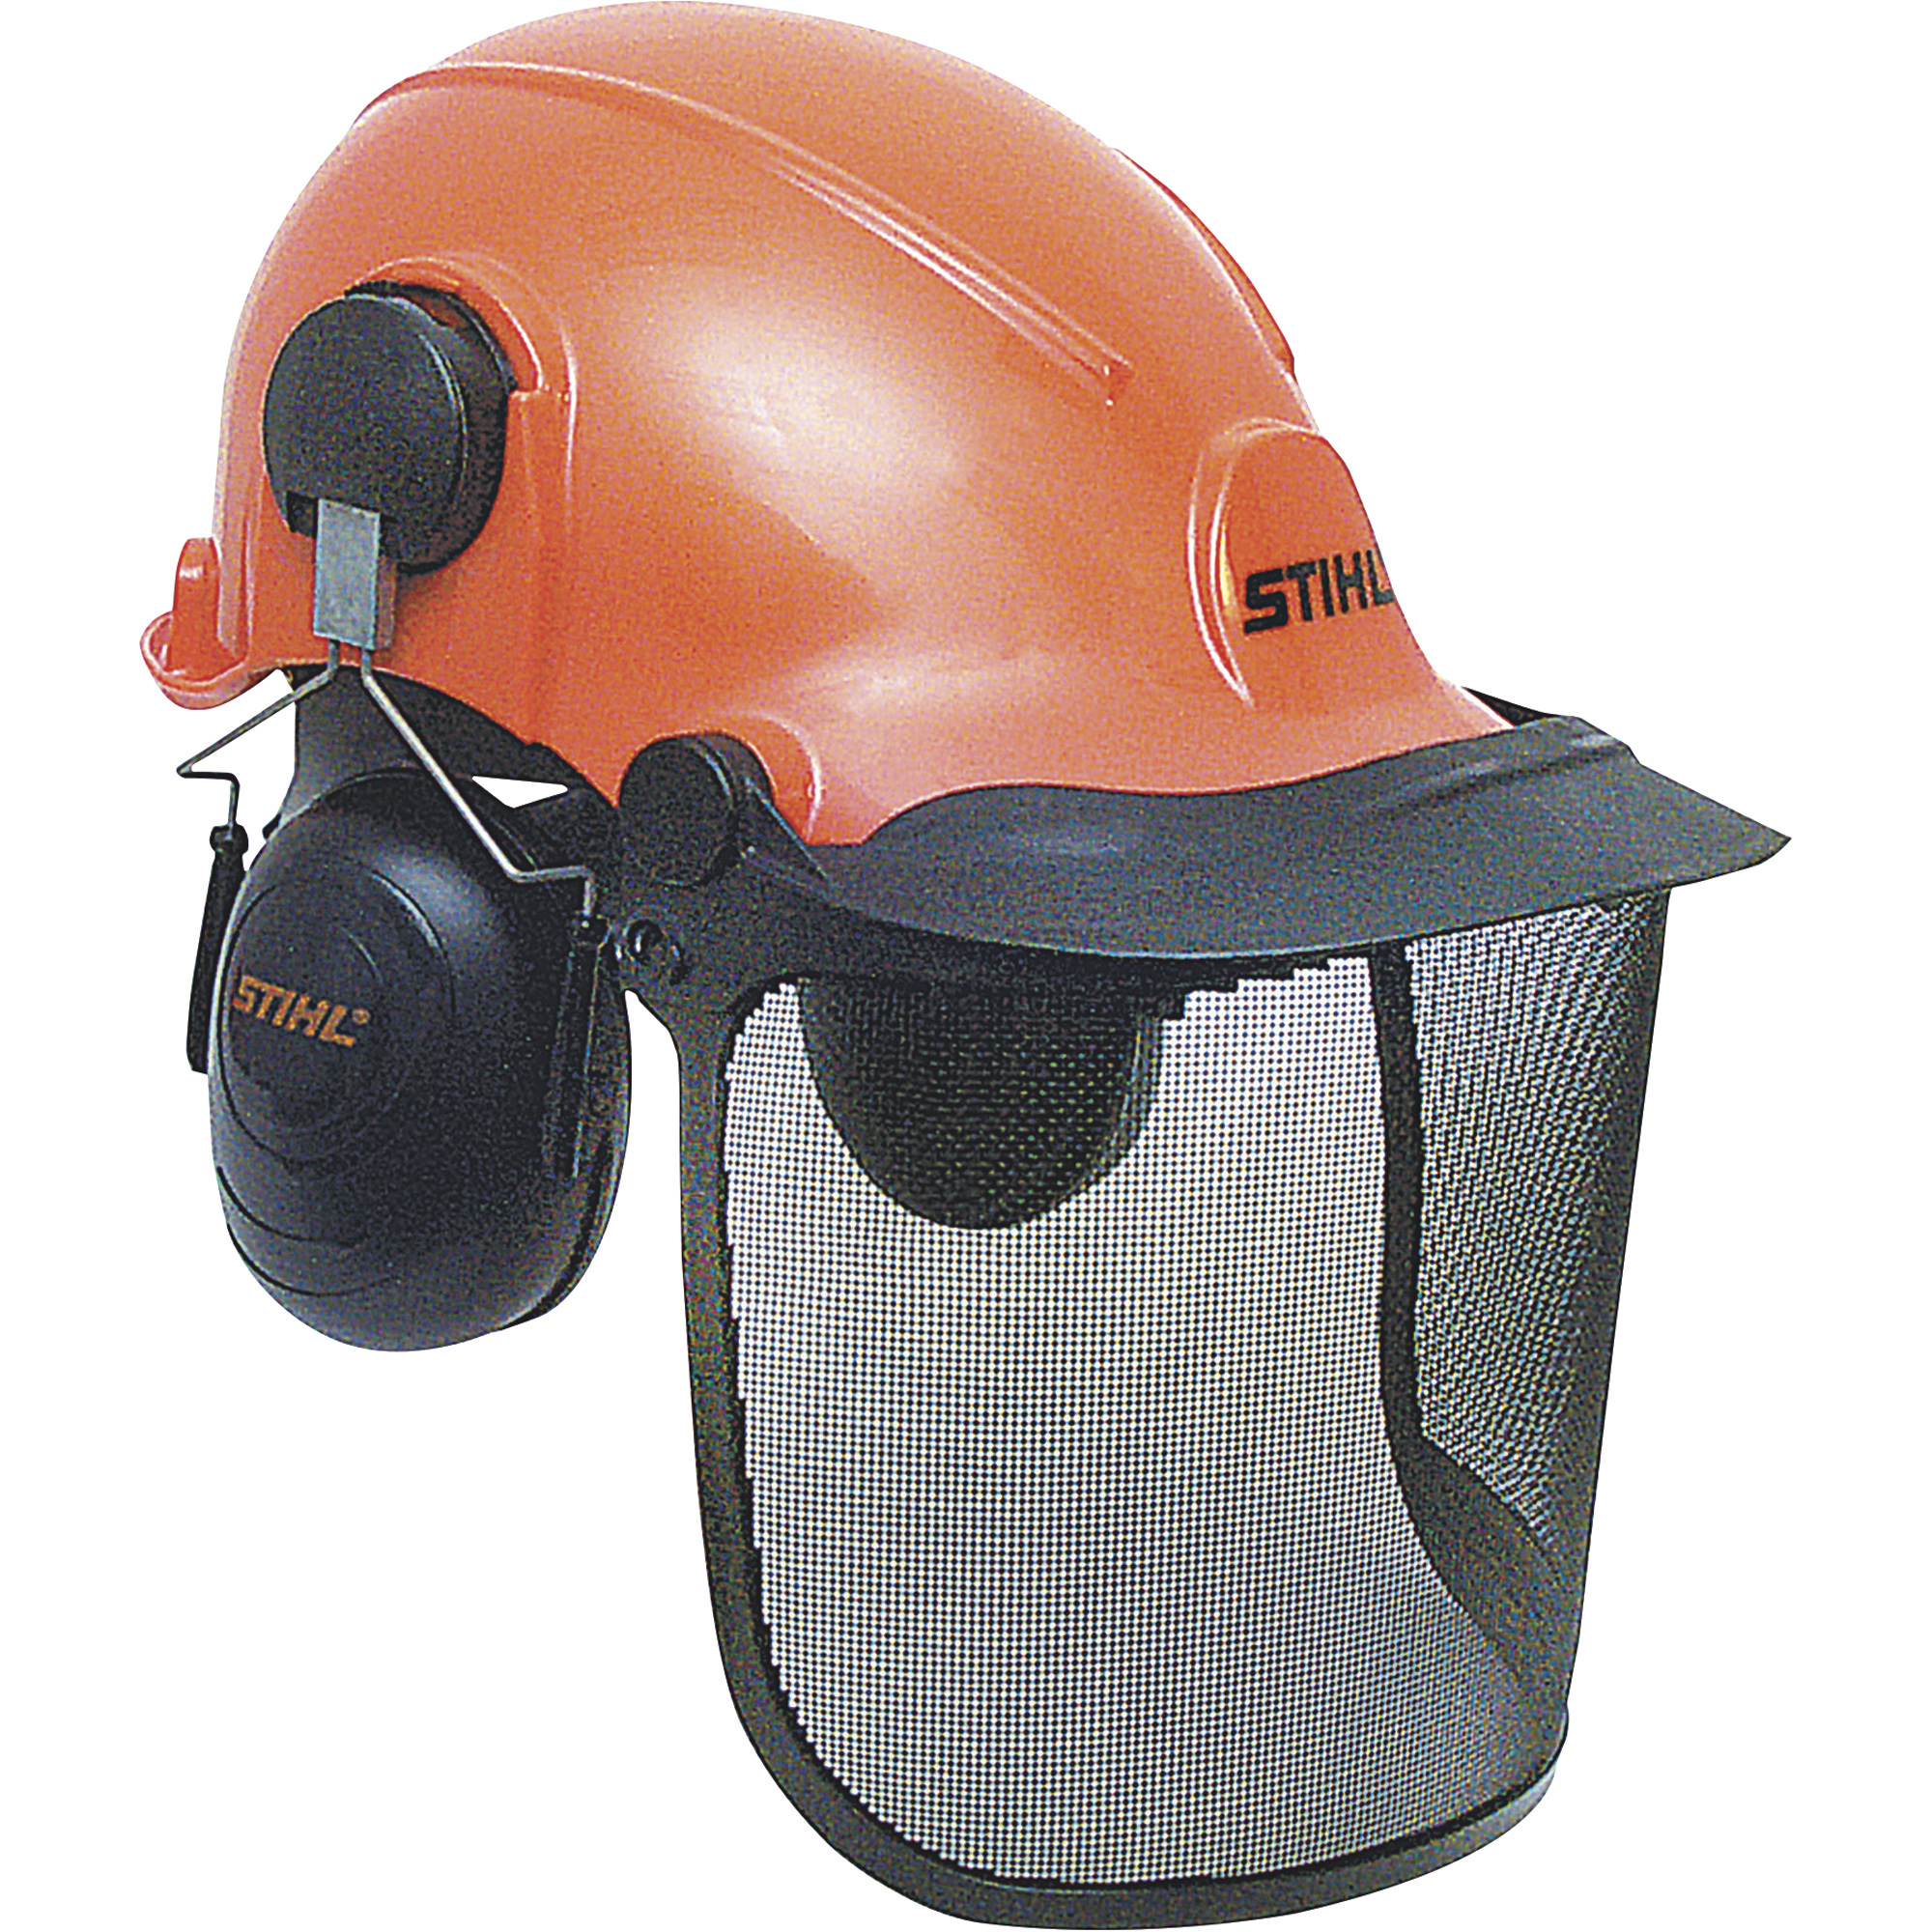 STIHL Complete Forestry Helmet System â One Size Fits Most, Orange, Model 0000 886 0100